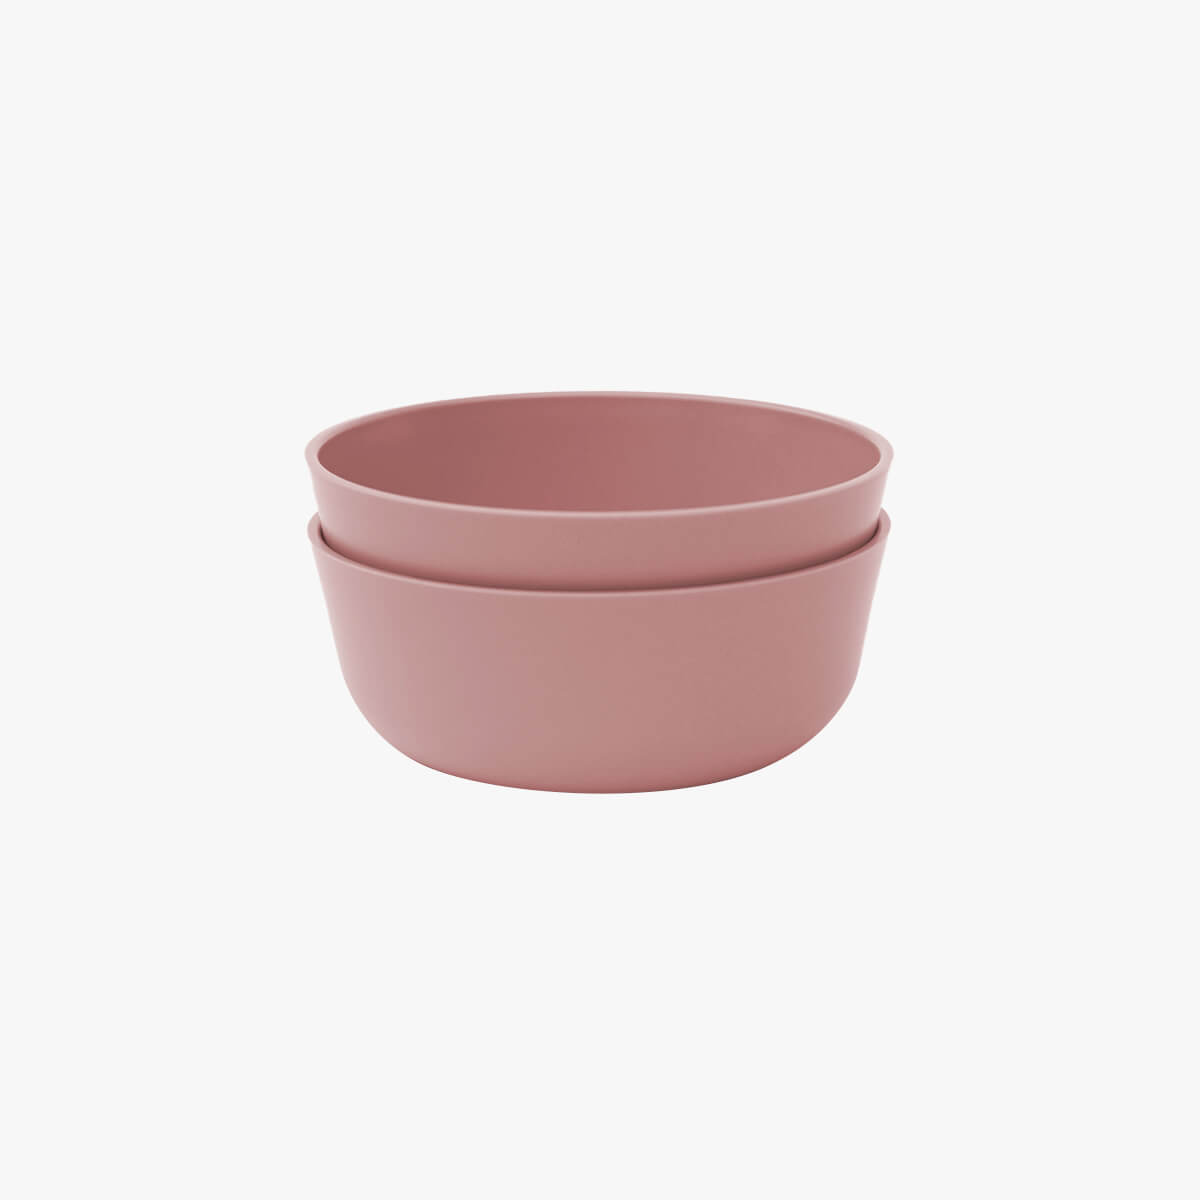 Mealtime Bowl in Blush / ezpz Basics Line / Stylish Bowls for Big Kids